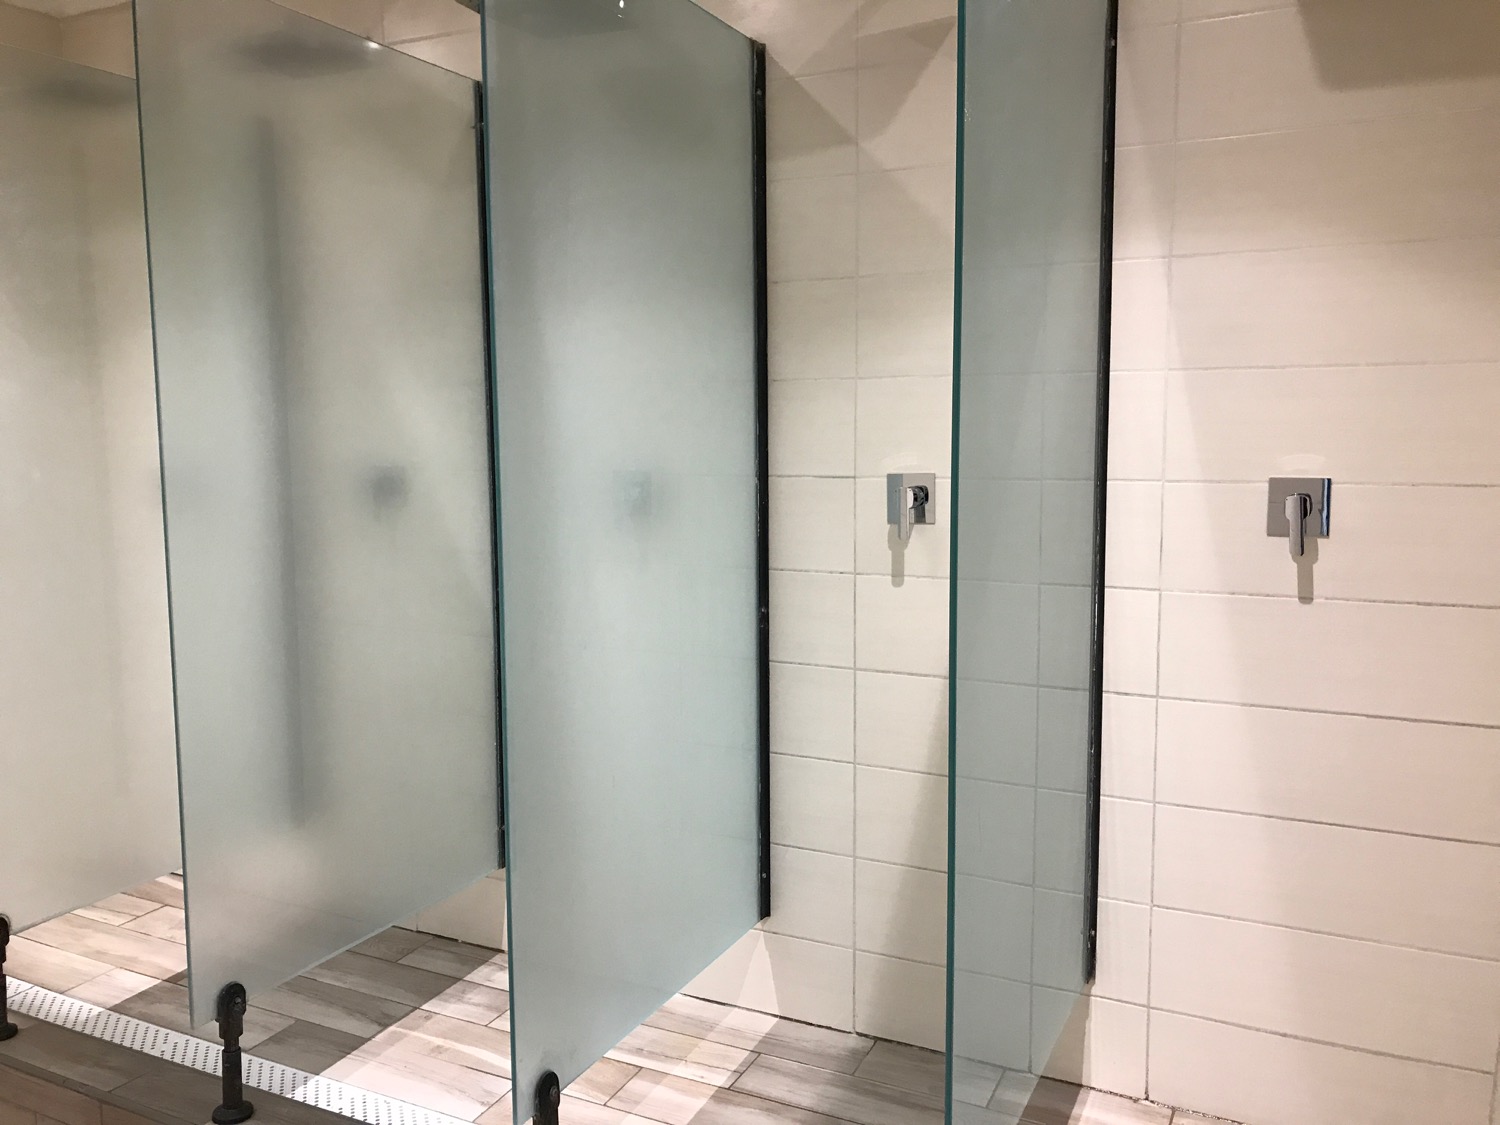 a glass shower doors in a bathroom